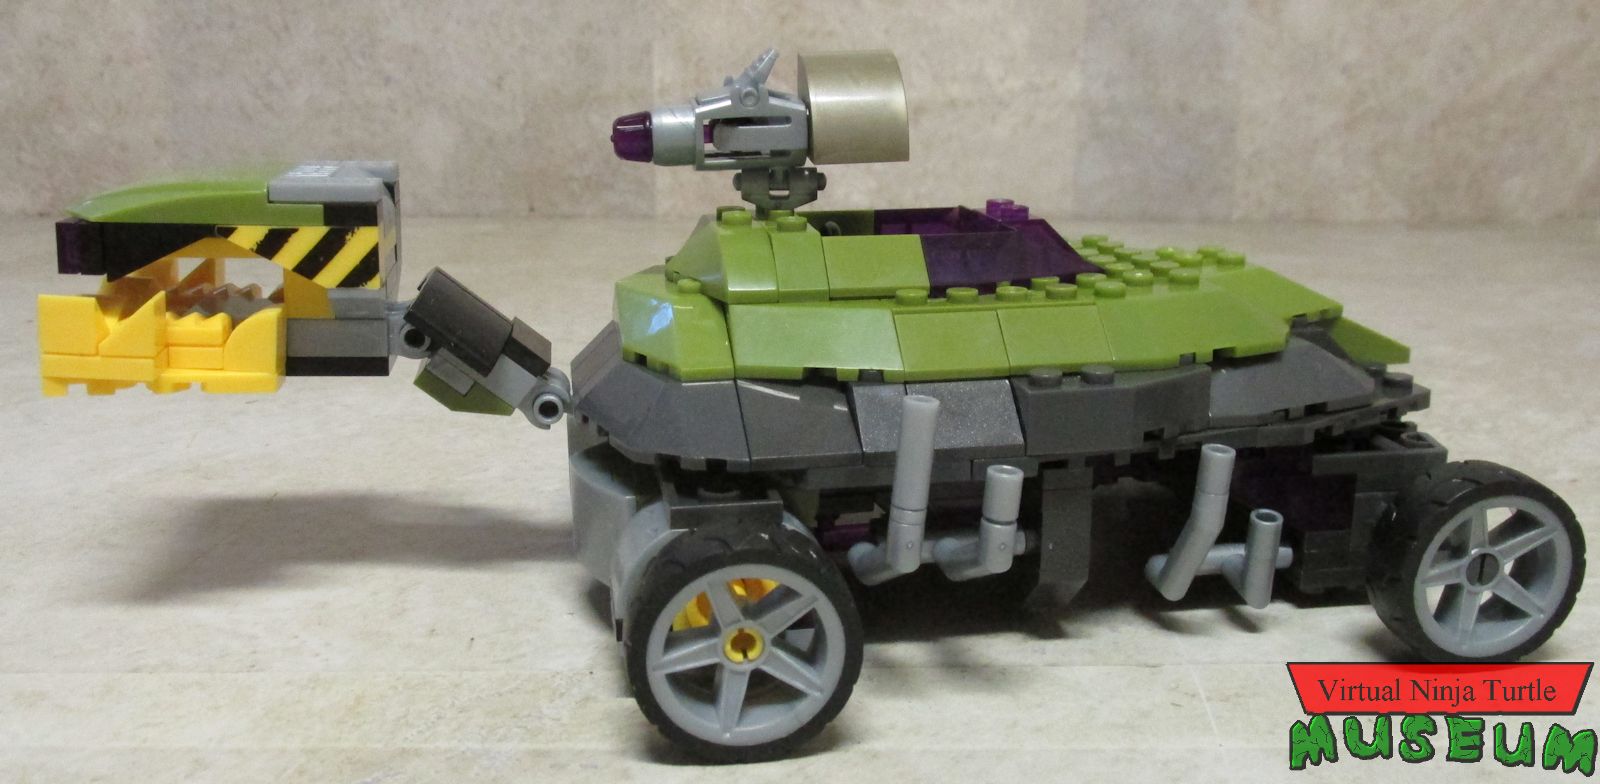 Turtle Mech vehicle form